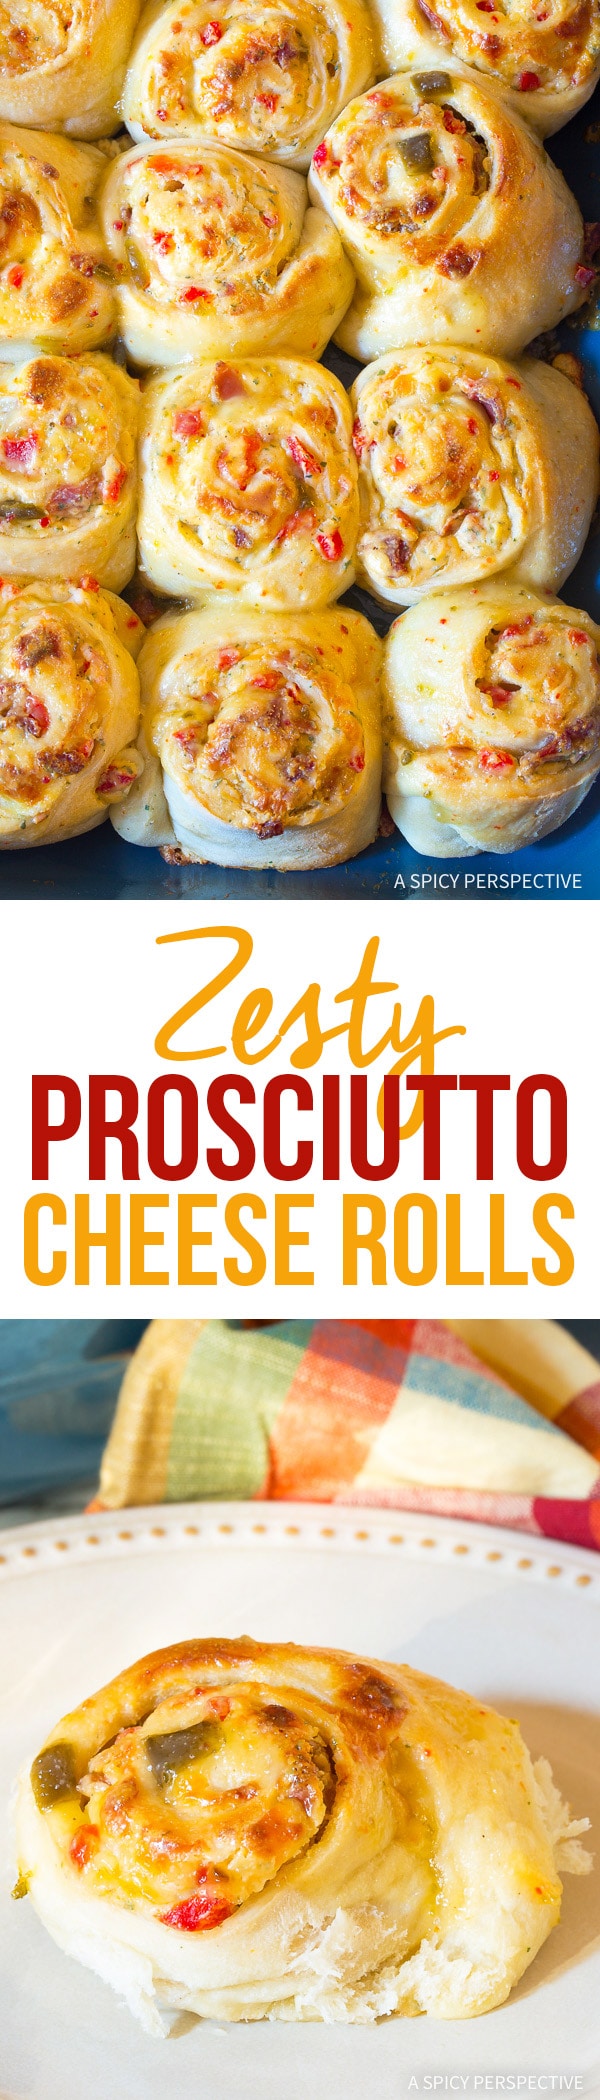 Zesty Prosciutto Cheese Rolls Recipe